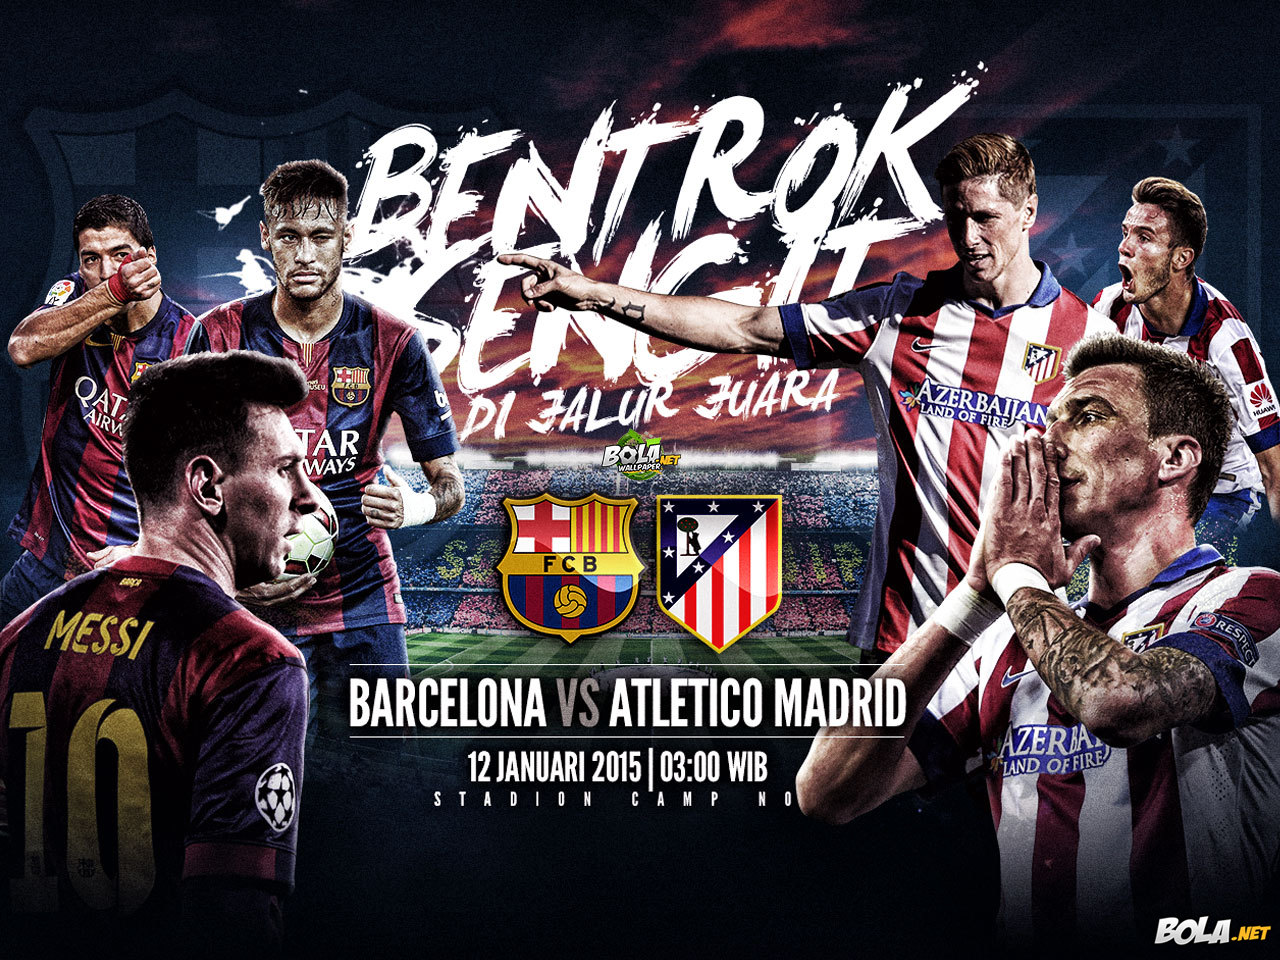 Download Wallpaper Barcelona Vs Atletico Madrid Bolanet